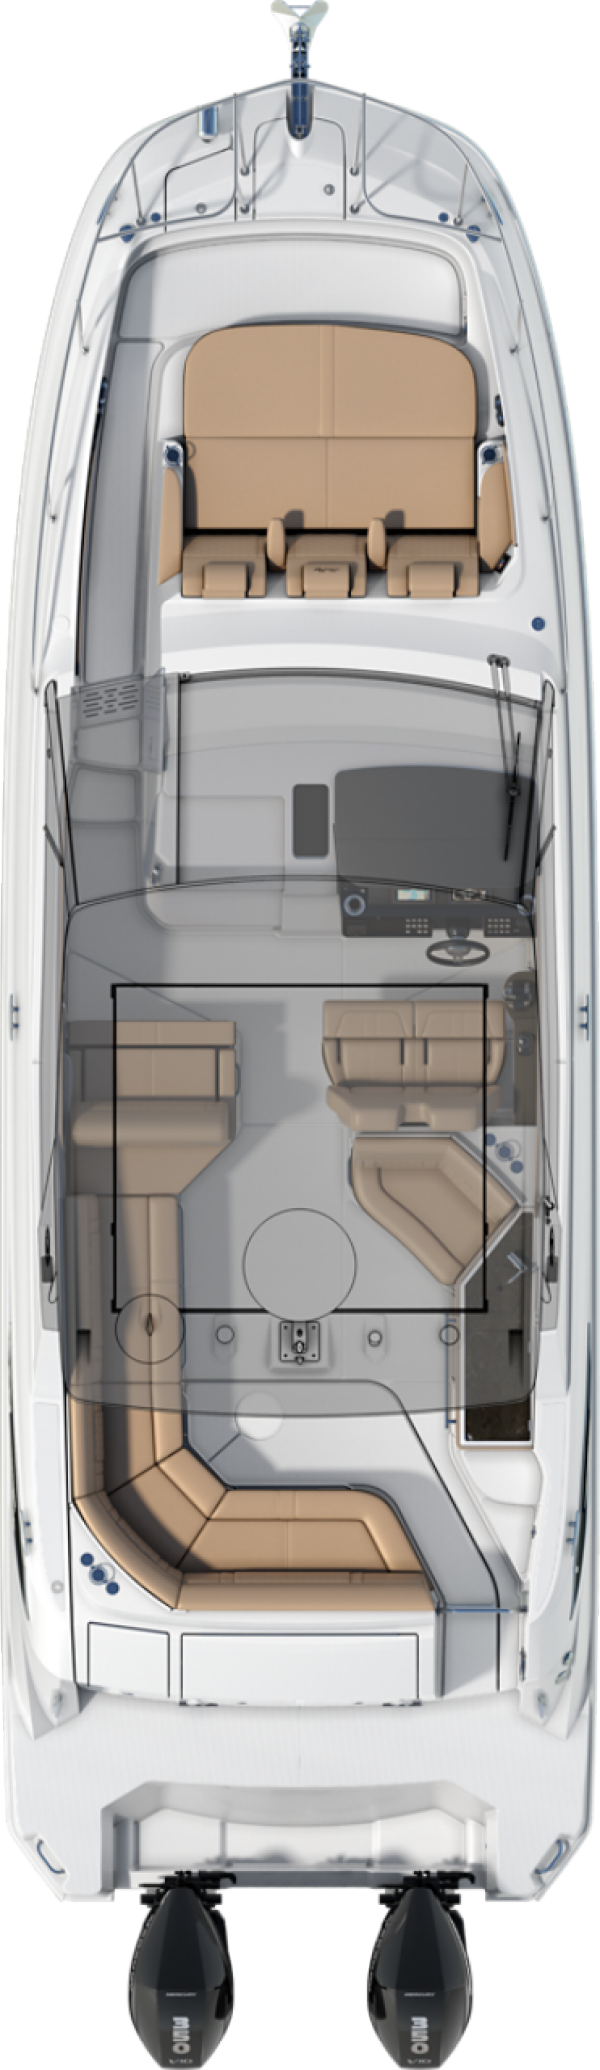 Sundancer 320 Outboard Cockpit floor plan